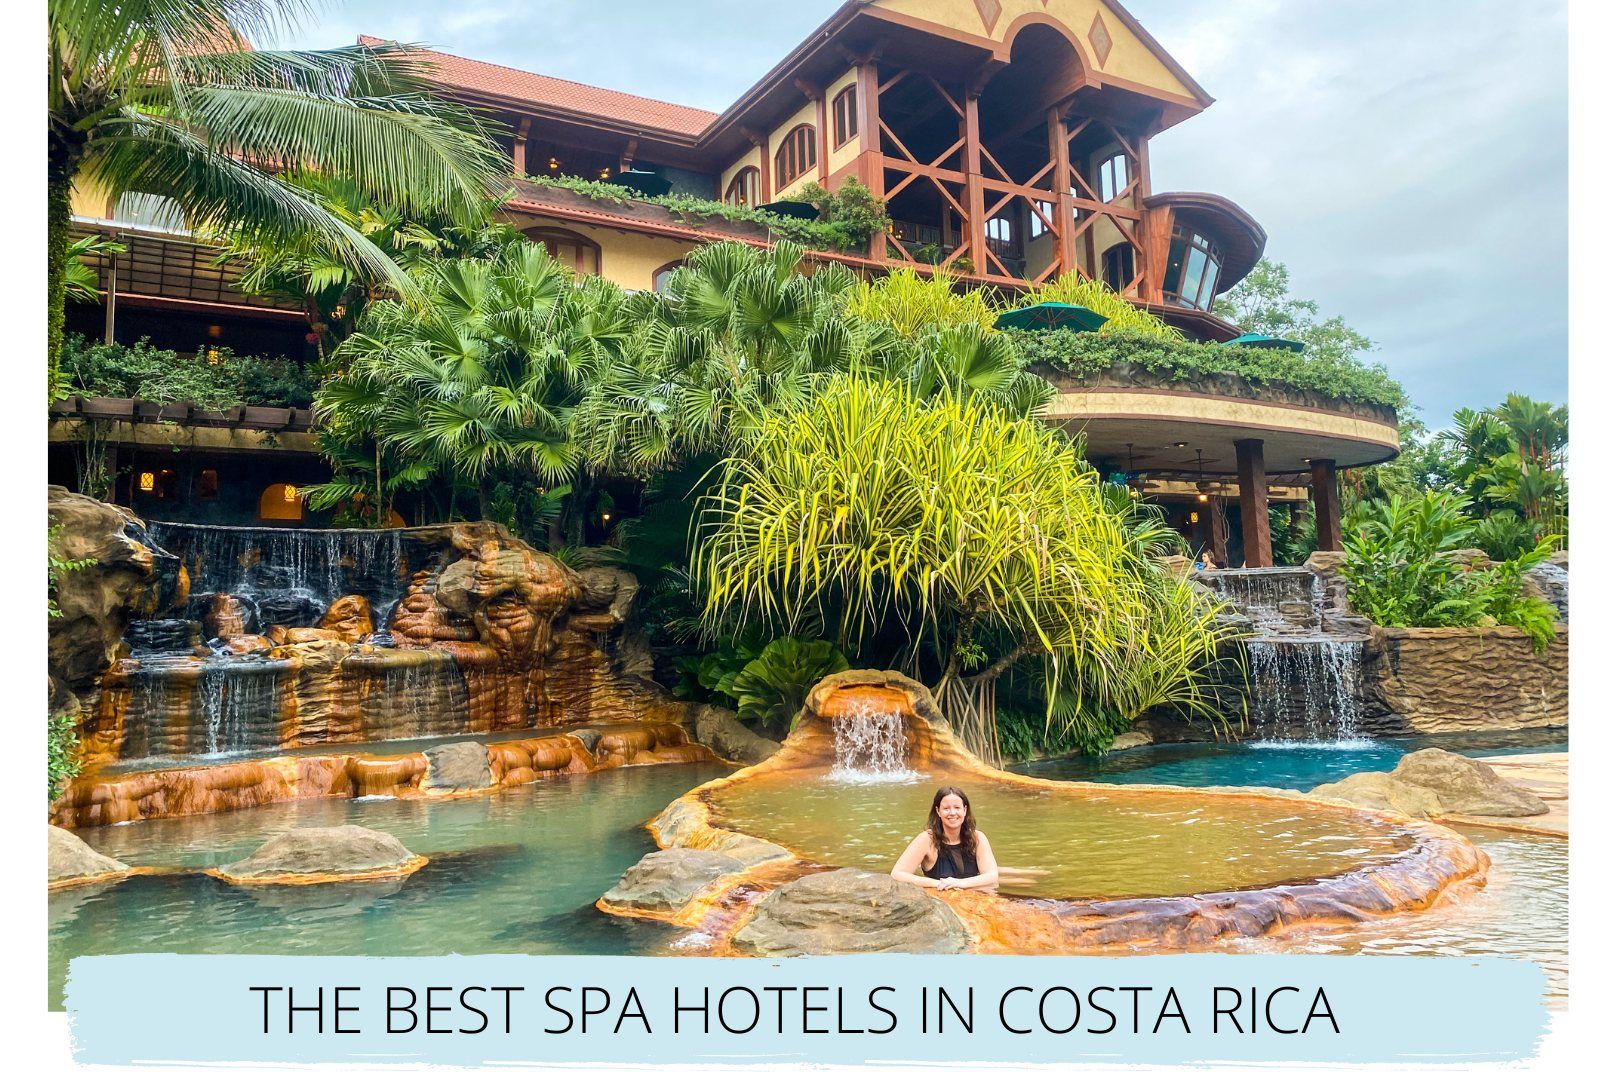 Costa Rica trip planner